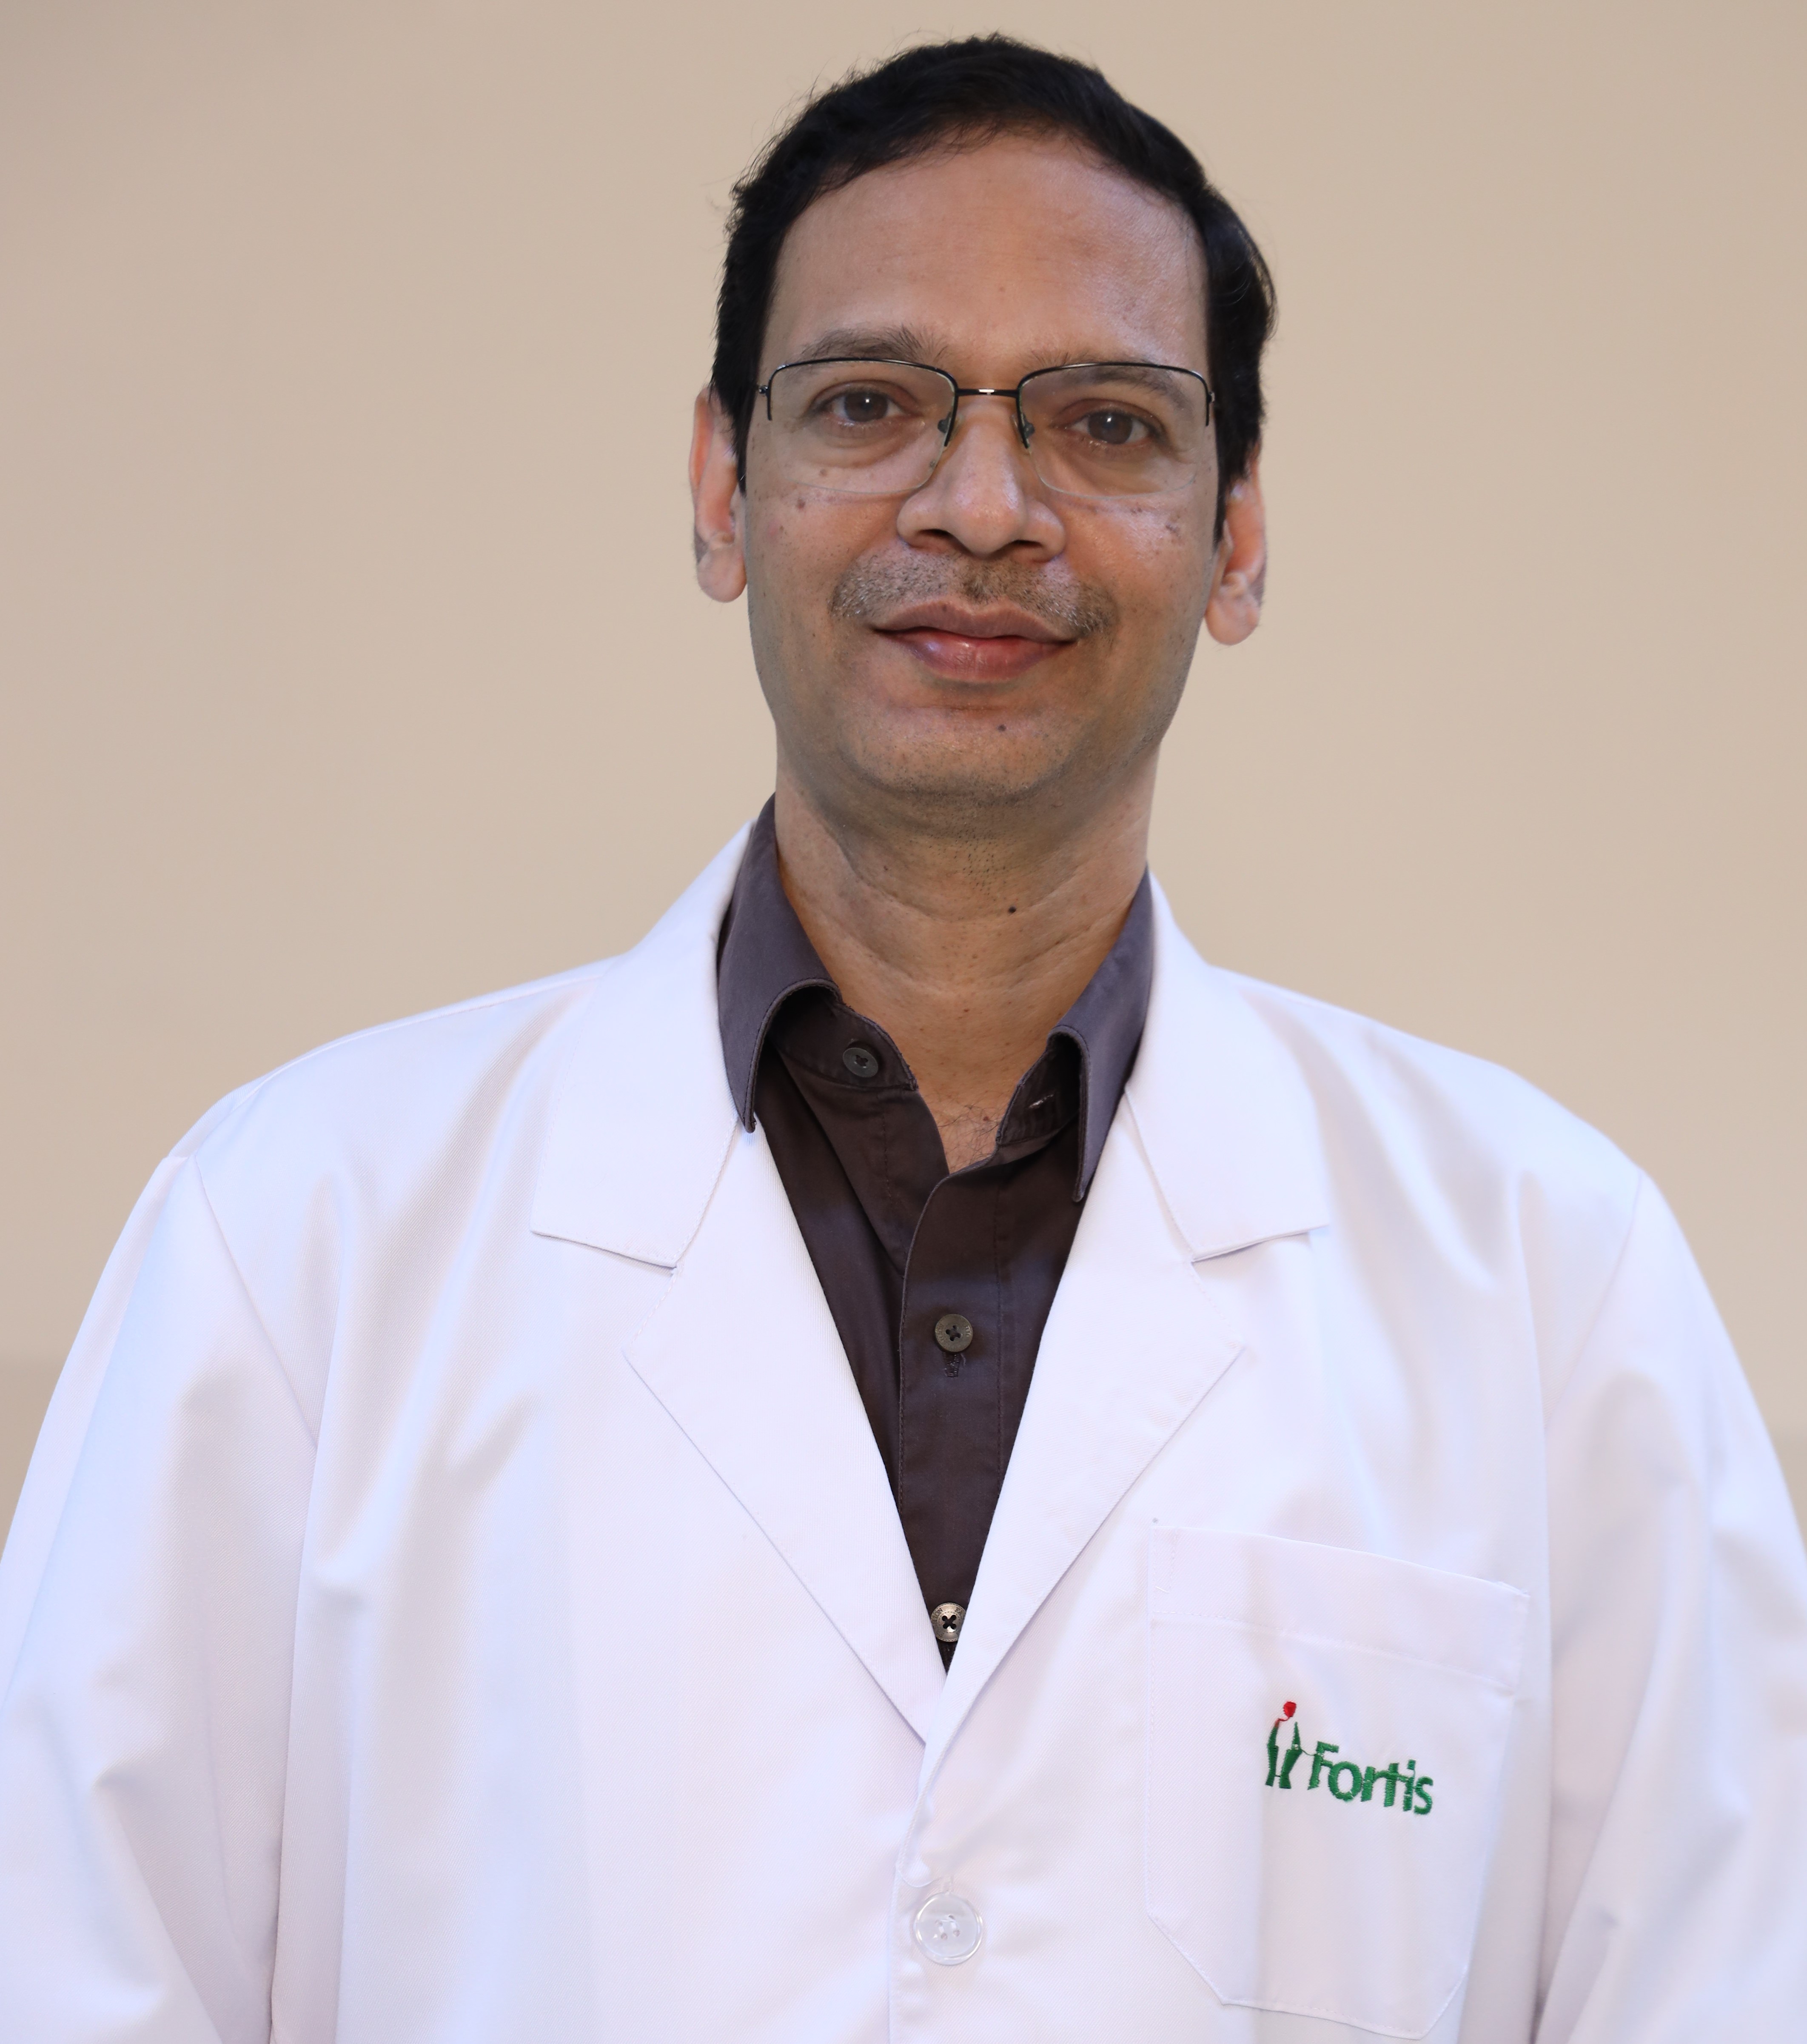 Dr. J P Singhvi